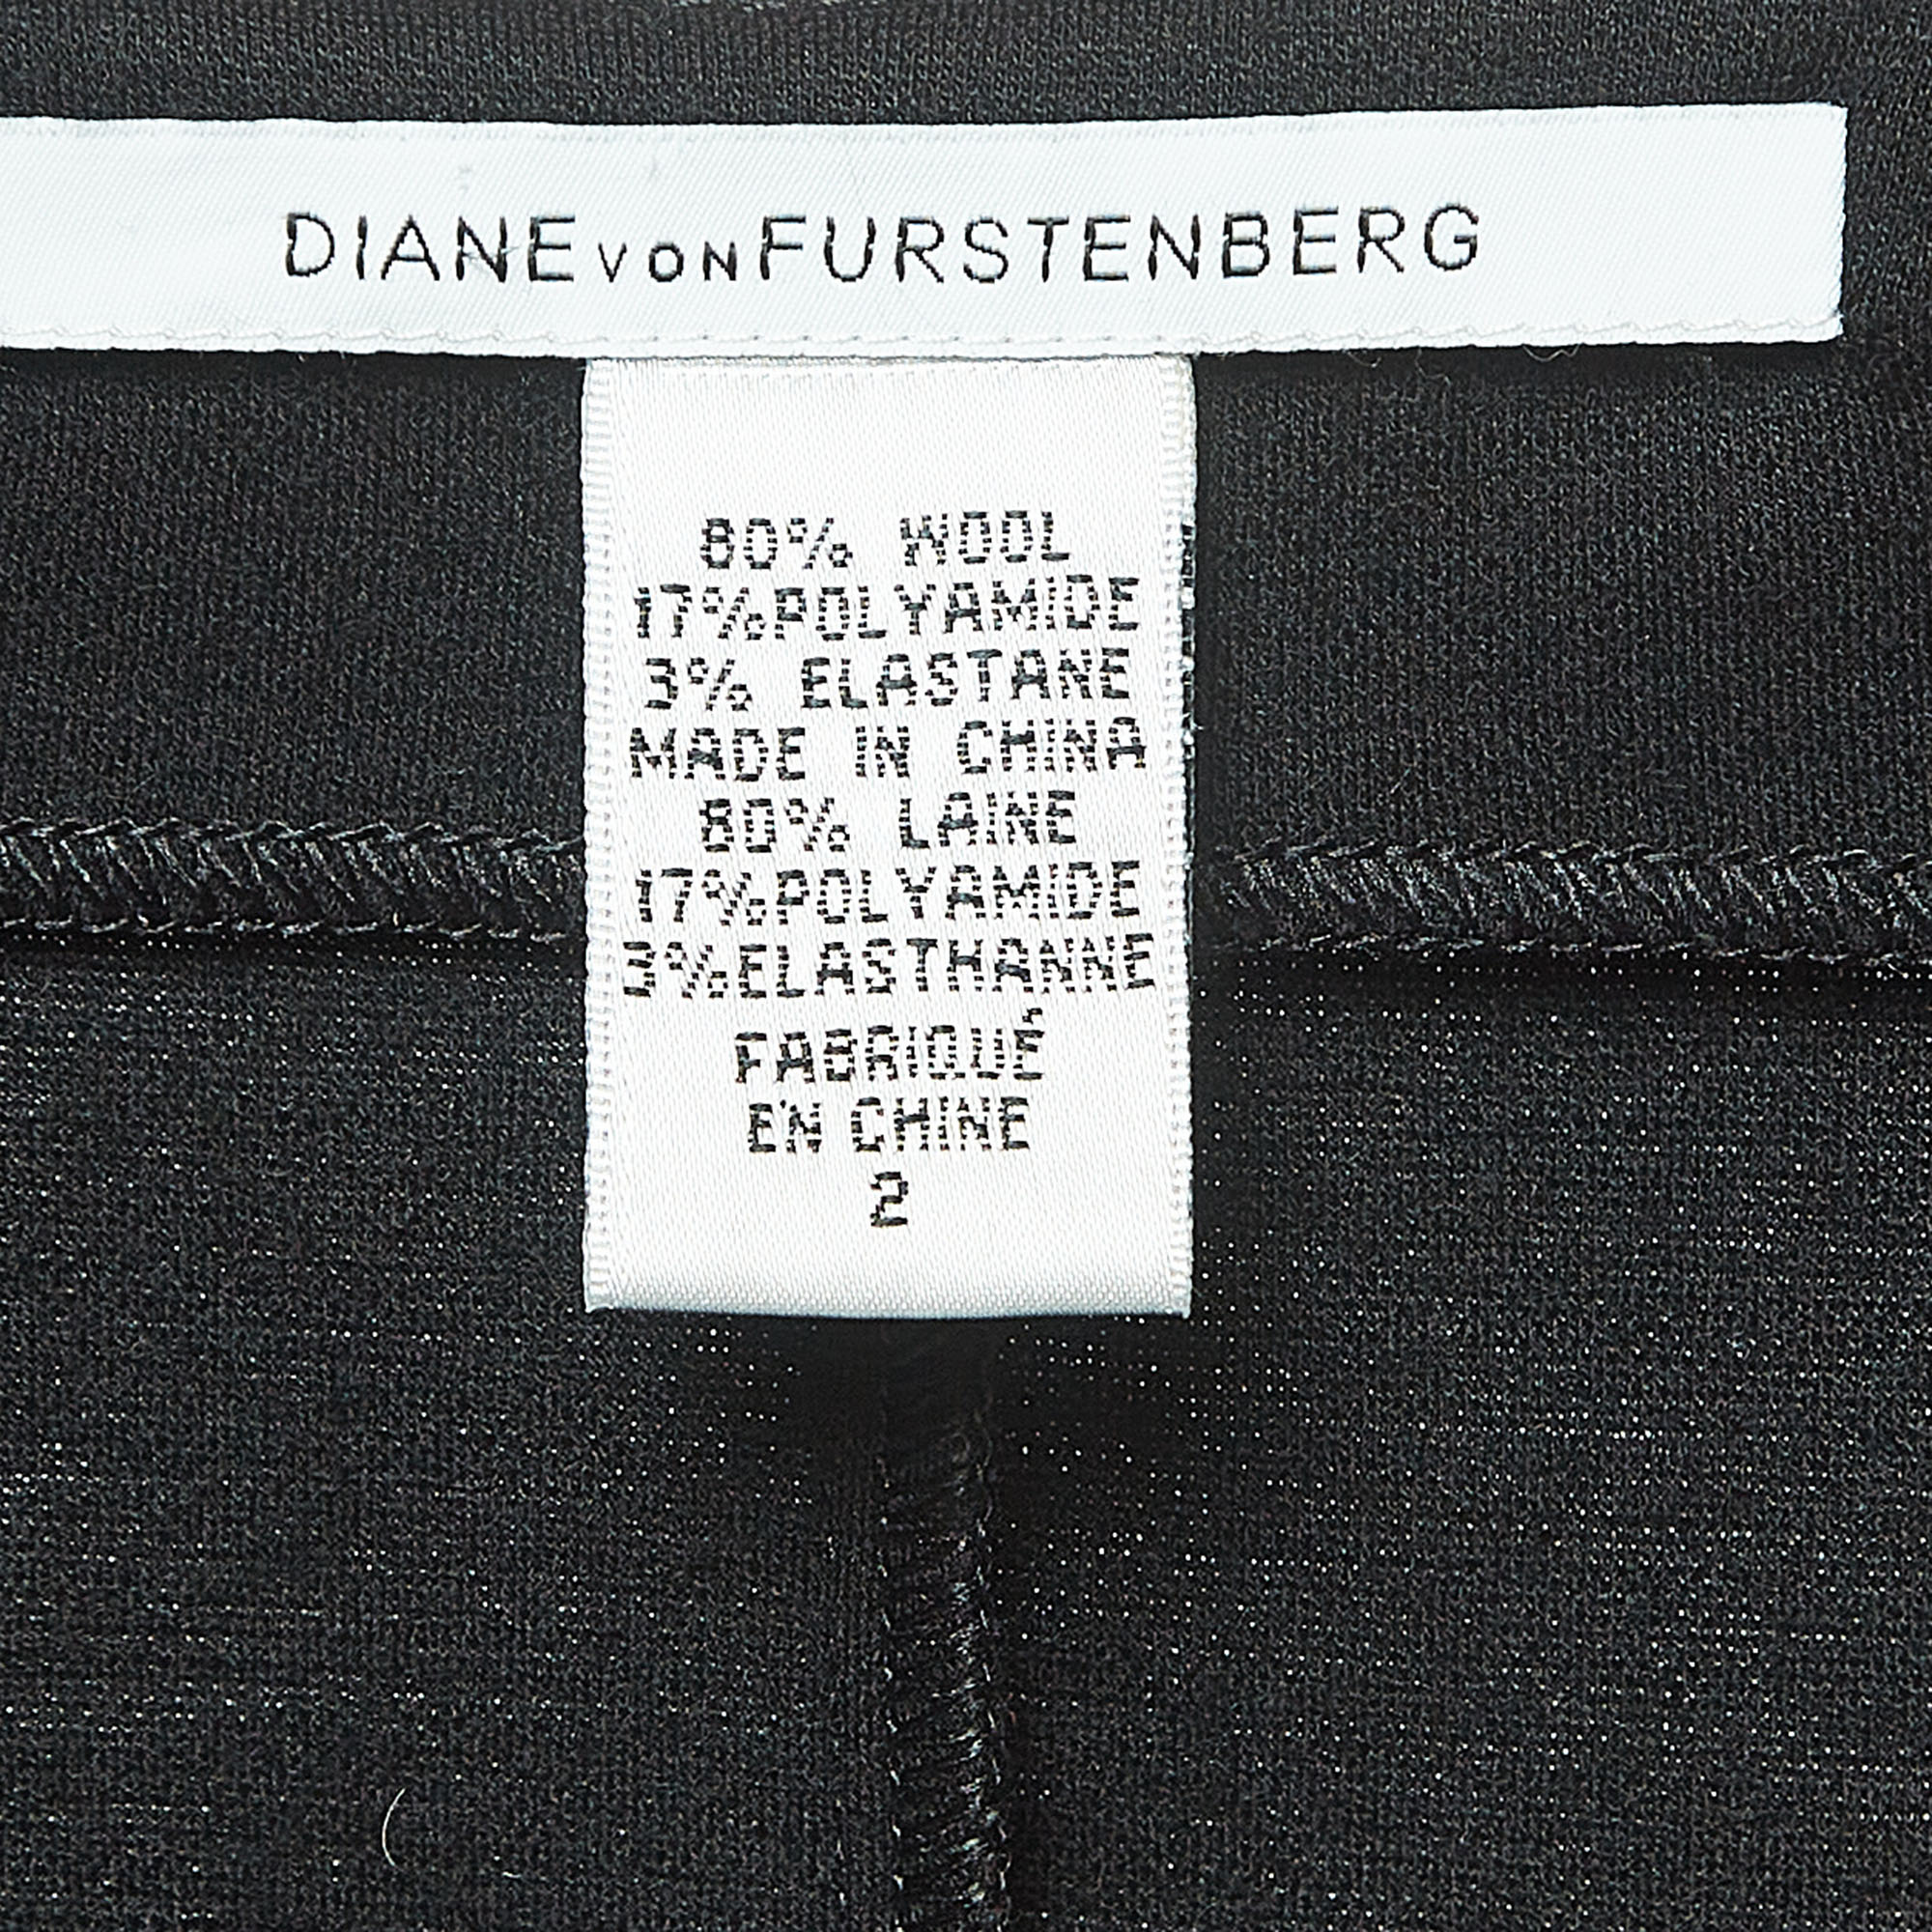 Diane Von Furstenberg Black Knit V-Neck Dress S